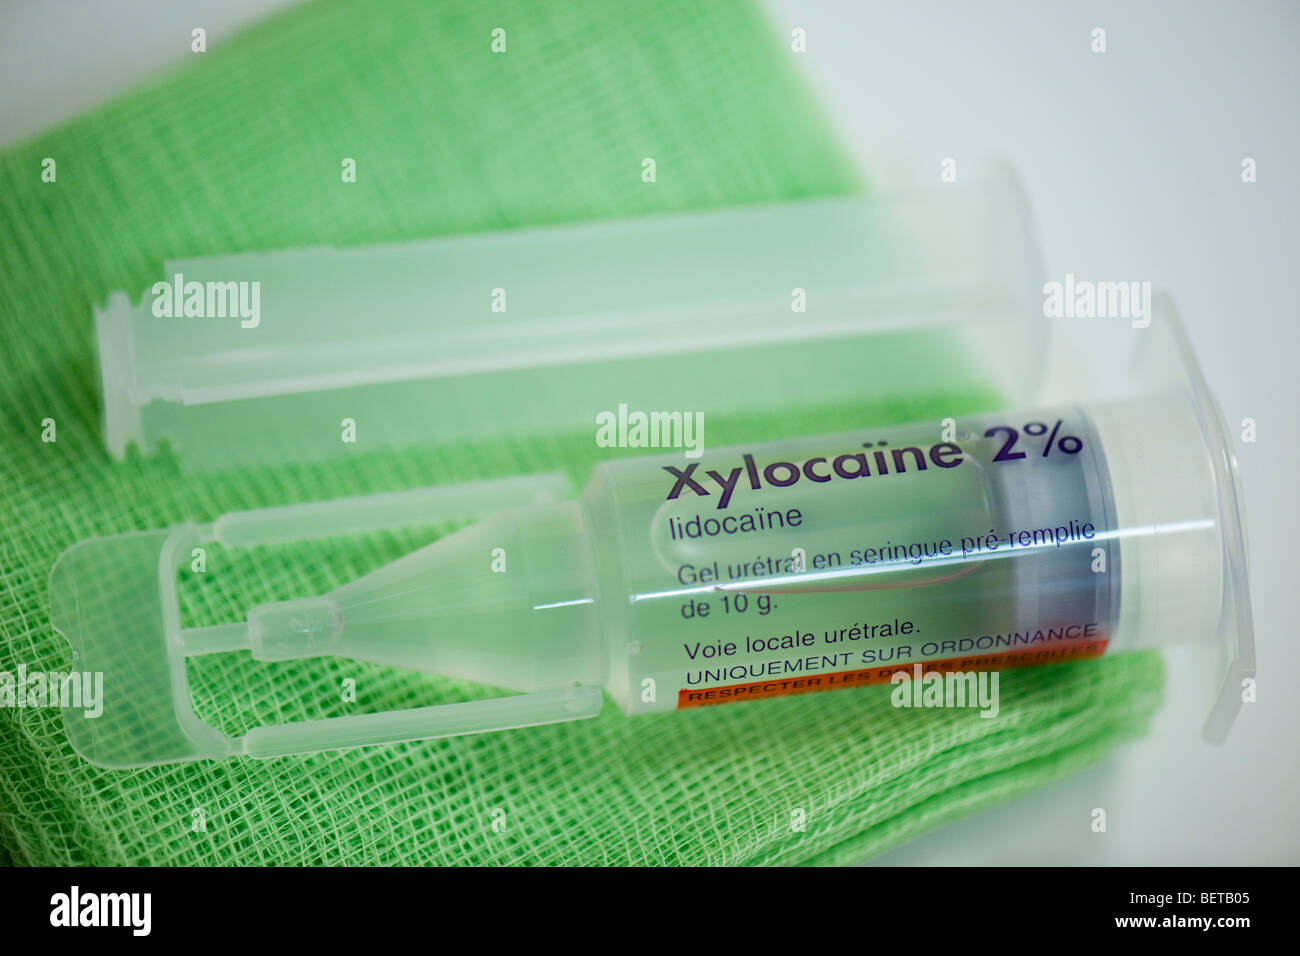 Xylocaine Lidocaine pre-filled syringe Stock Photo - Alamy